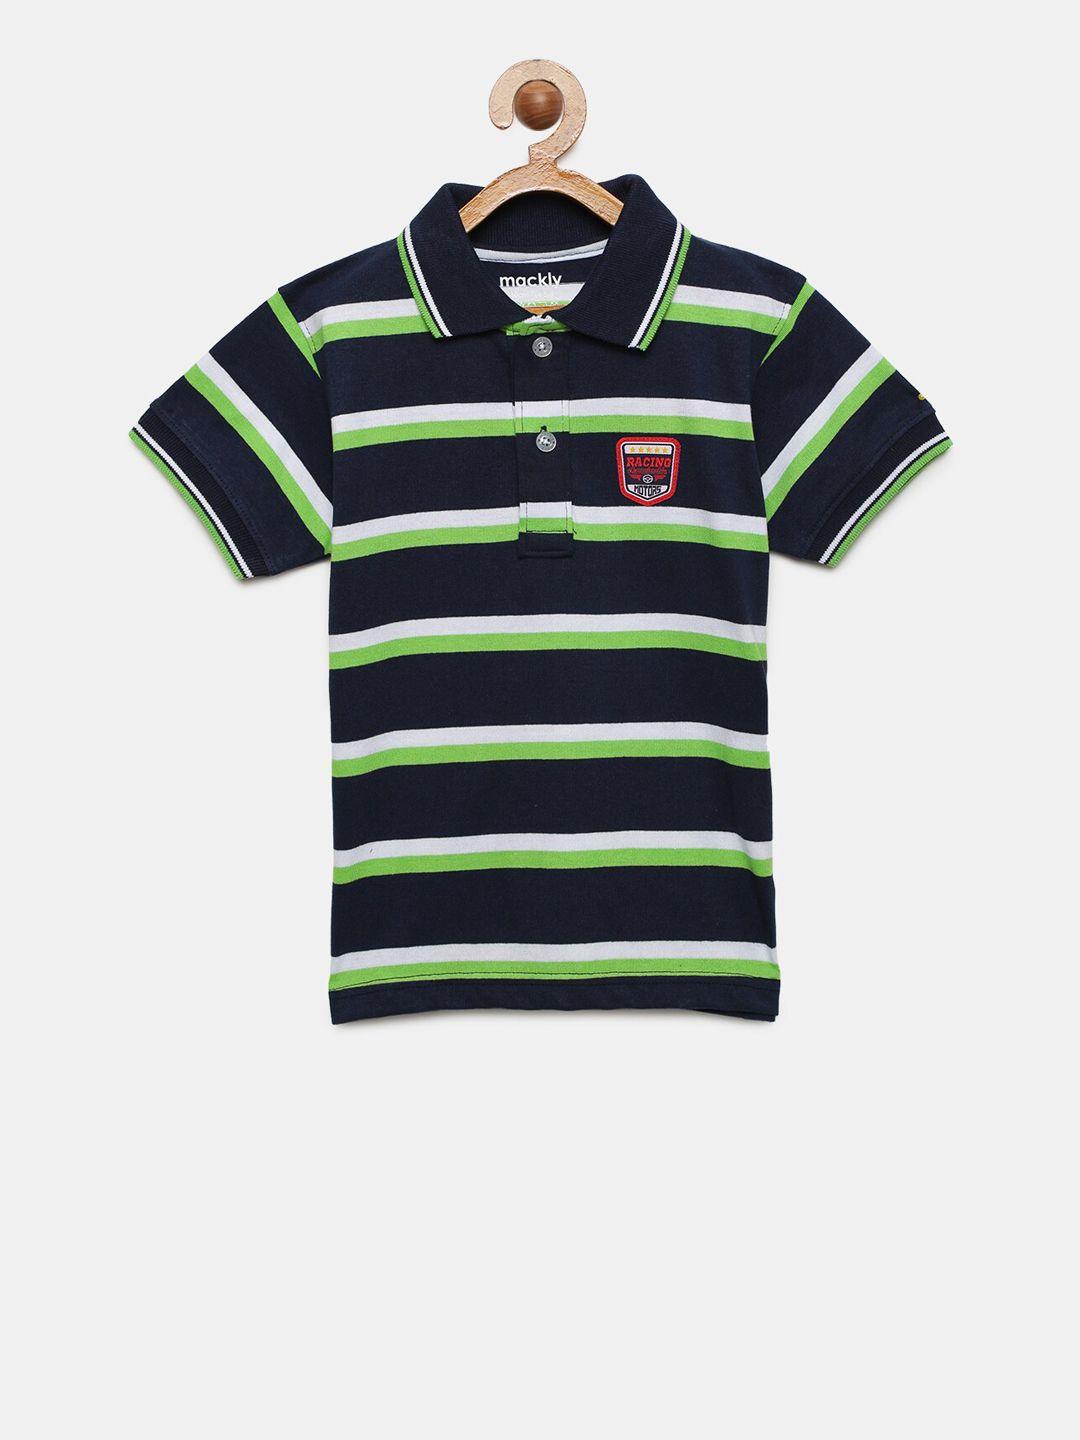 mackly boys navy blue & green striped polo lounge t-shirt